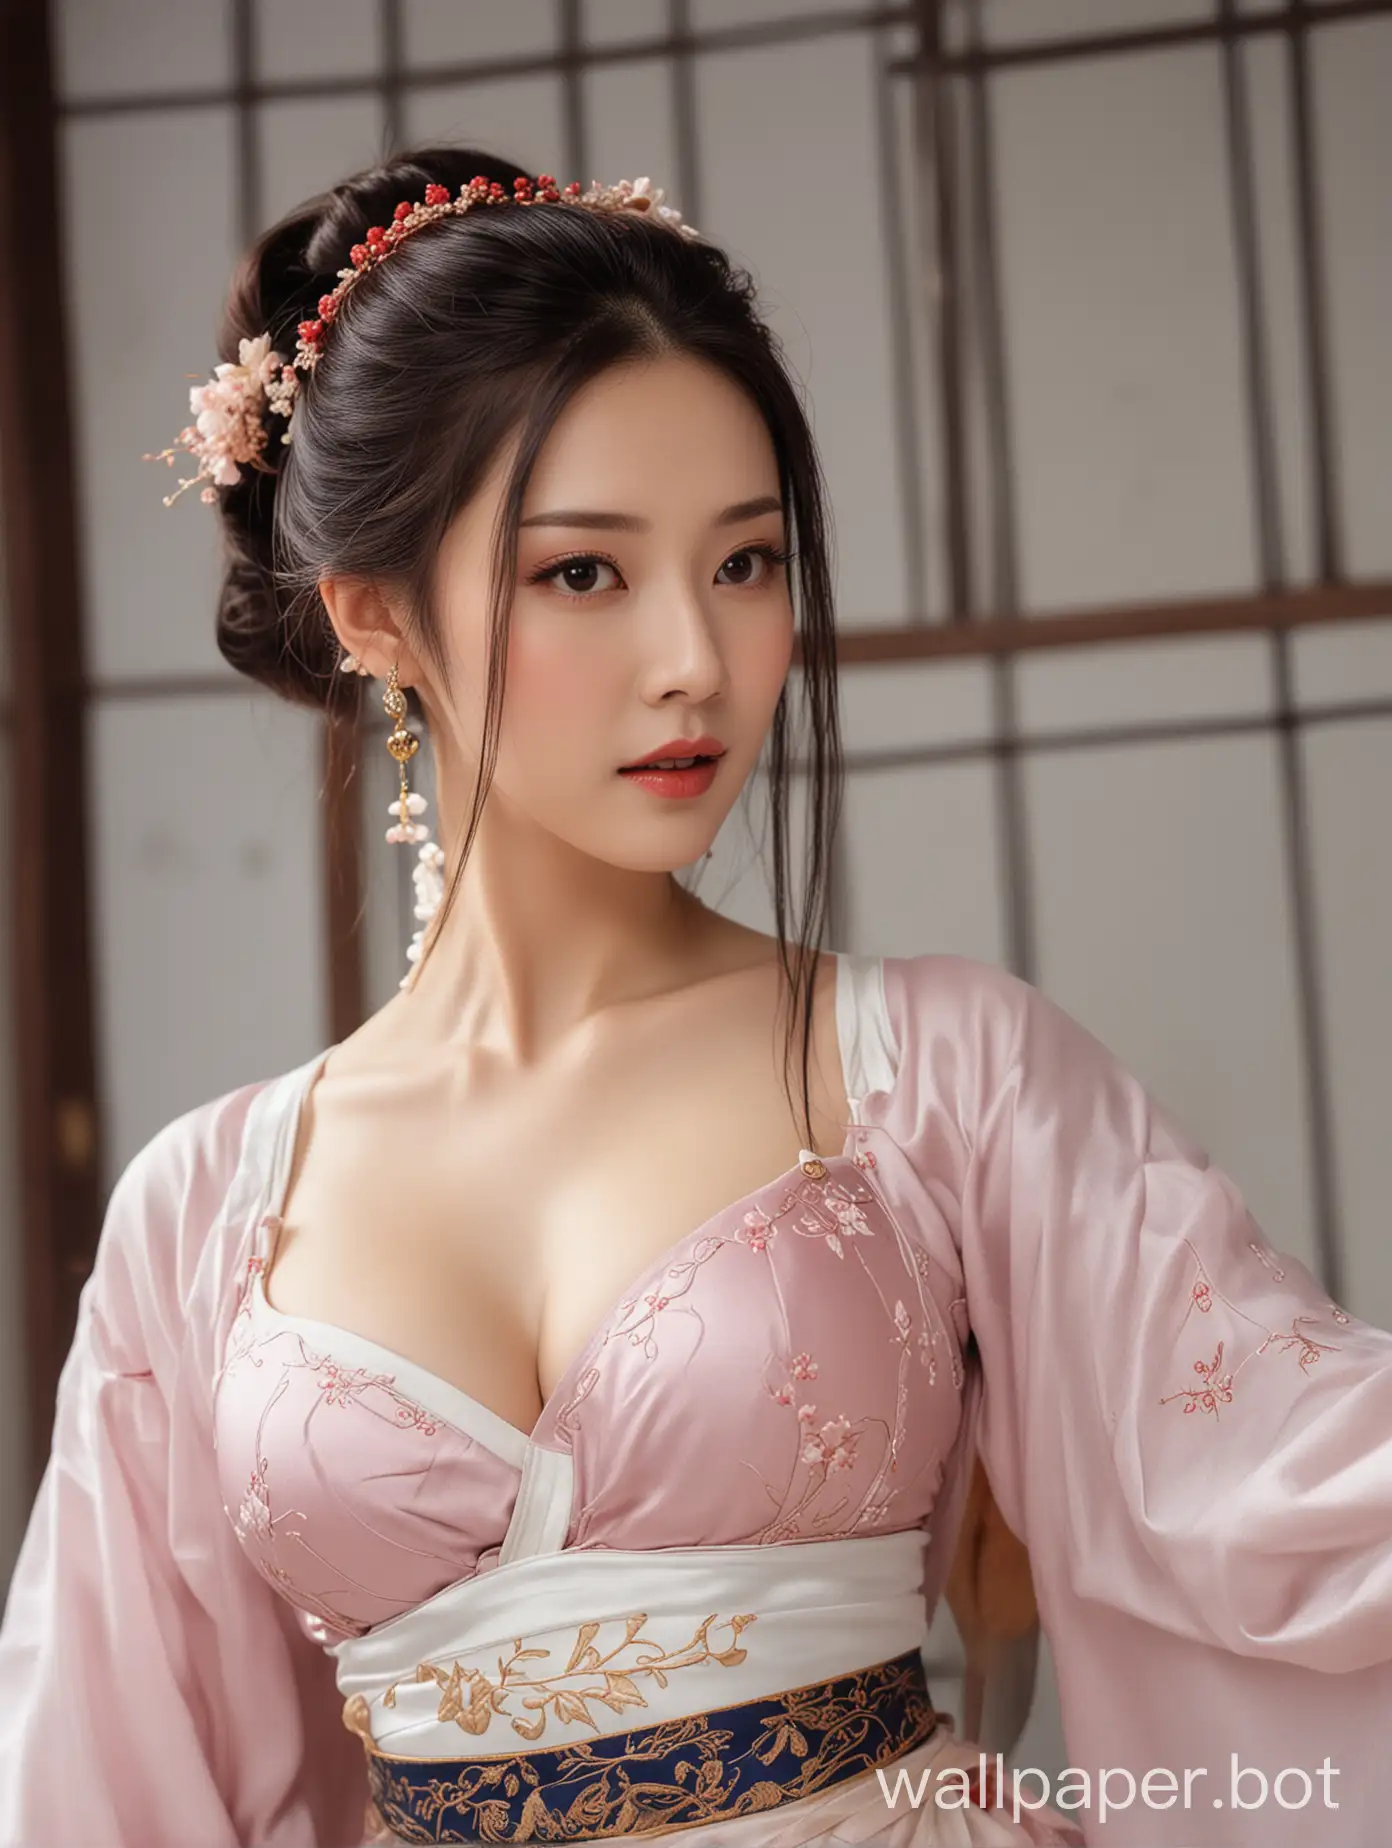 china hanfu model actress generate , wearing bra close shot